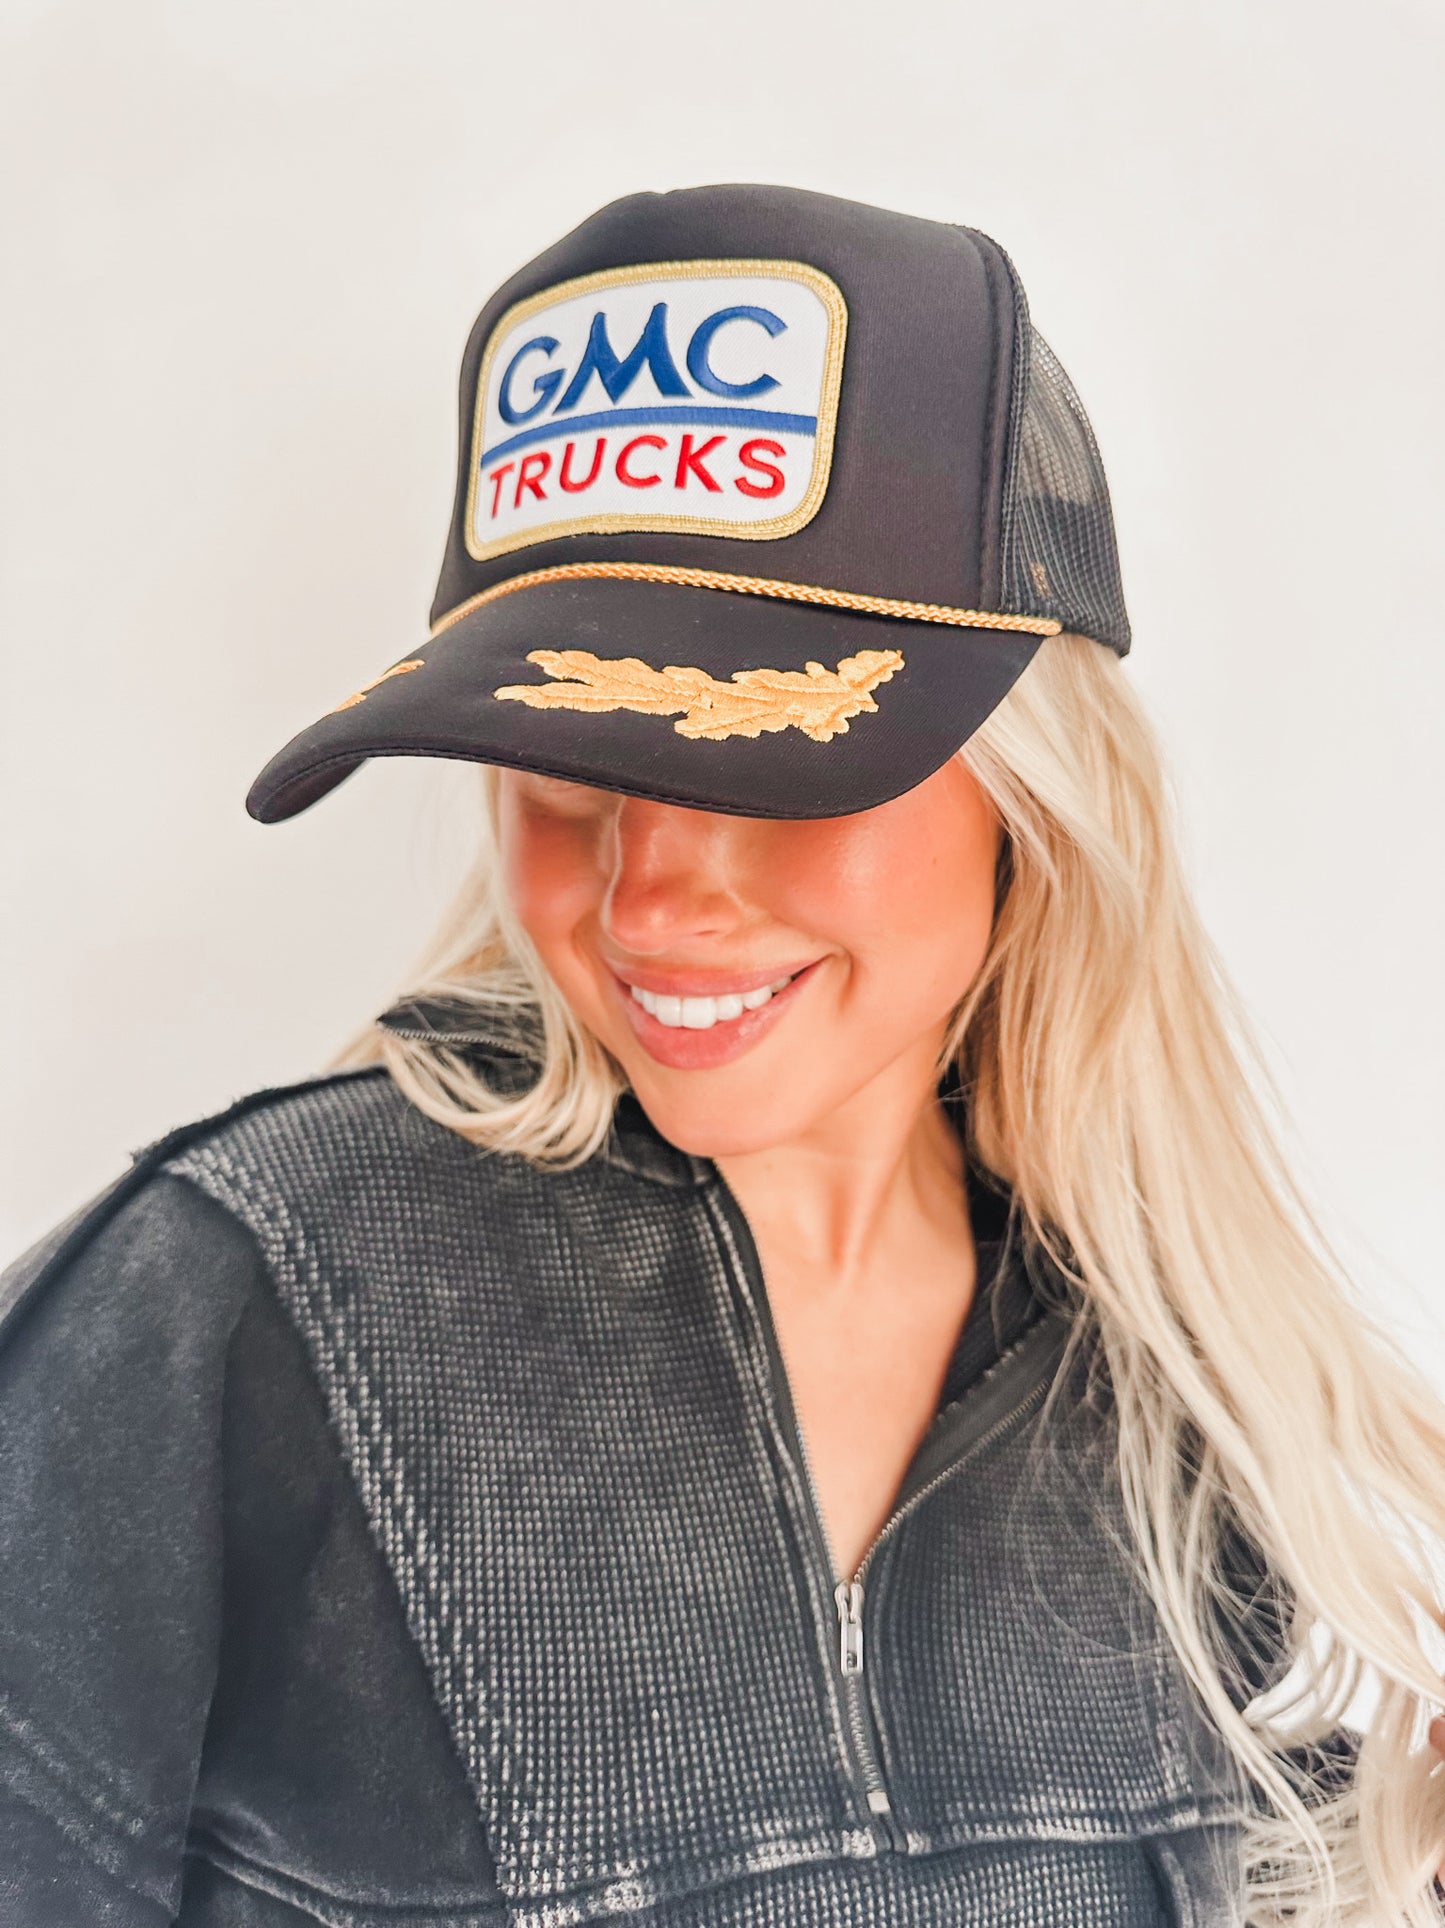 GMC Trucks Trucker Hat